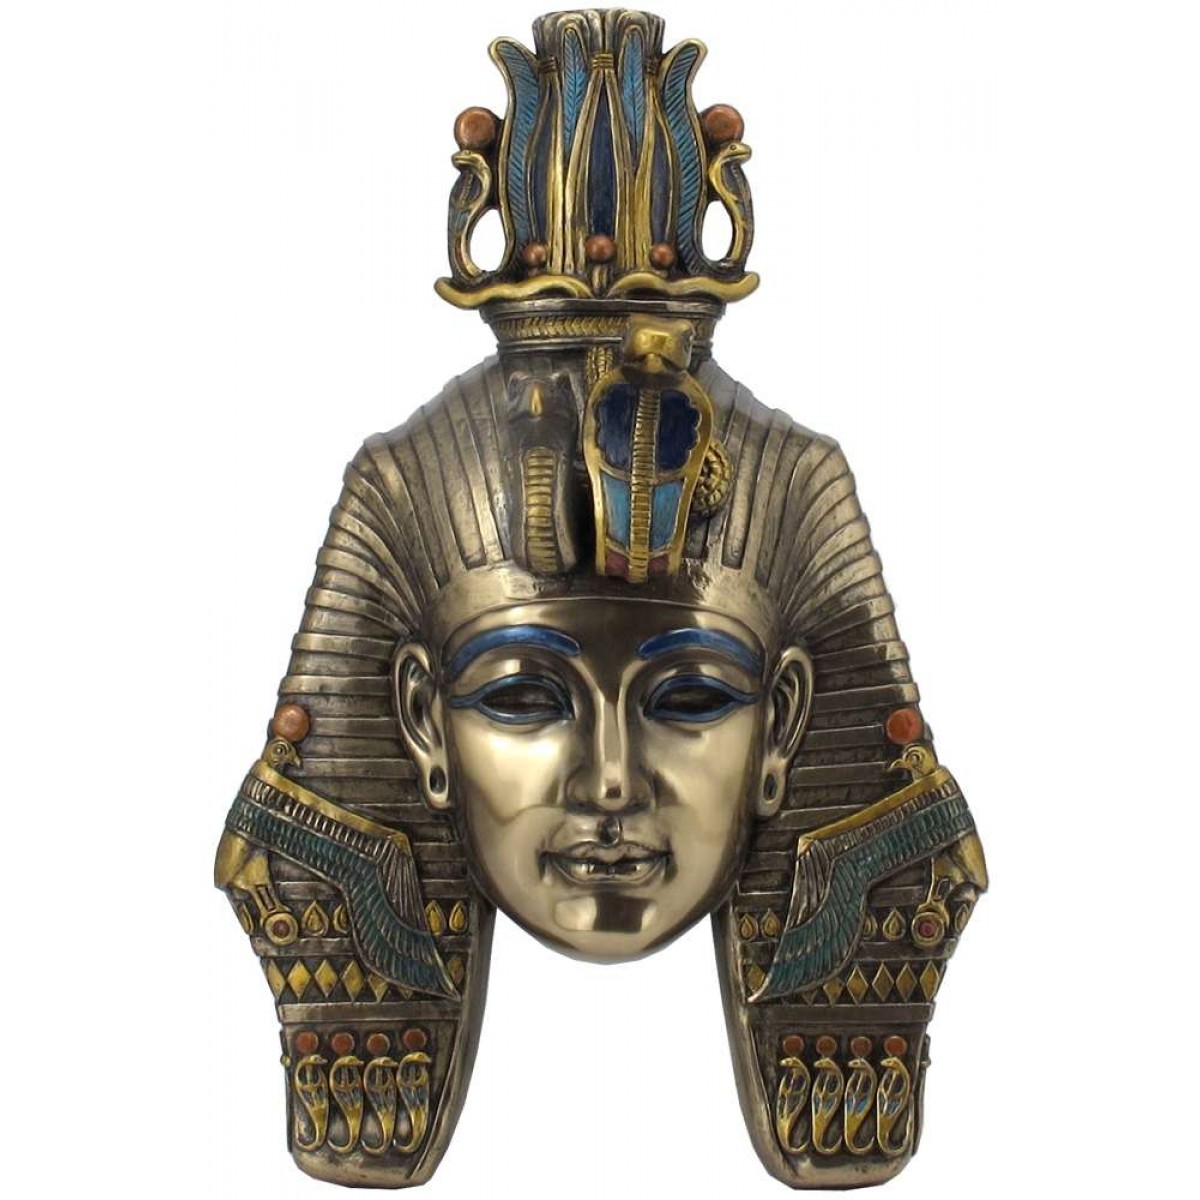 egyptian king crown